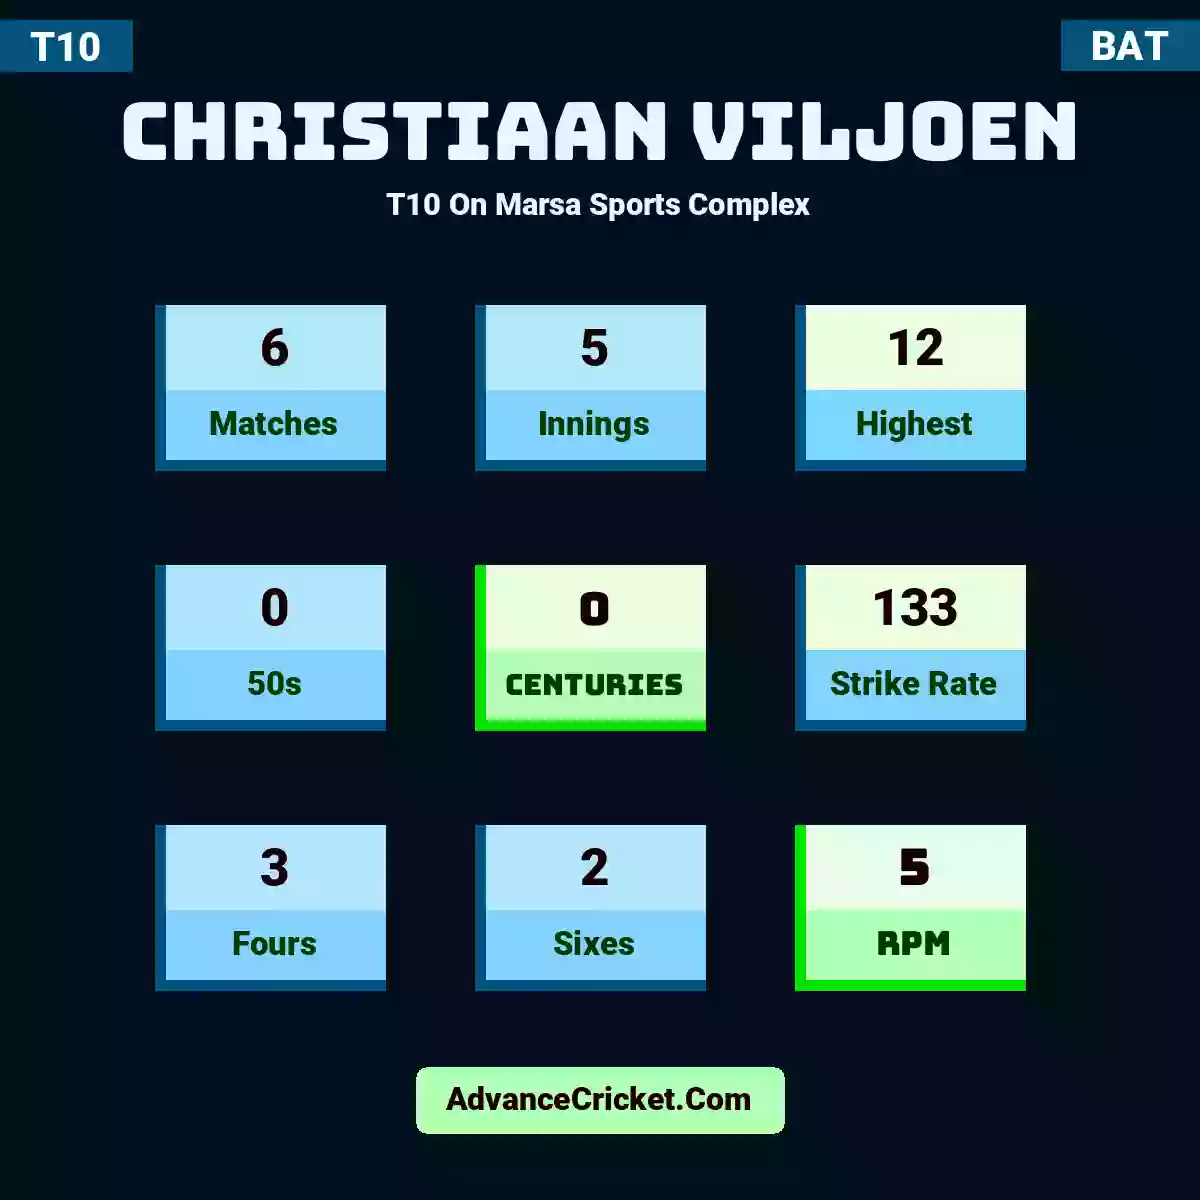 Christiaan Viljoen T10  On Marsa Sports Complex, Christiaan Viljoen played 6 matches, scored 12 runs as highest, 0 half-centuries, and 0 centuries, with a strike rate of 133. C.Viljoen hit 3 fours and 2 sixes, with an RPM of 5.